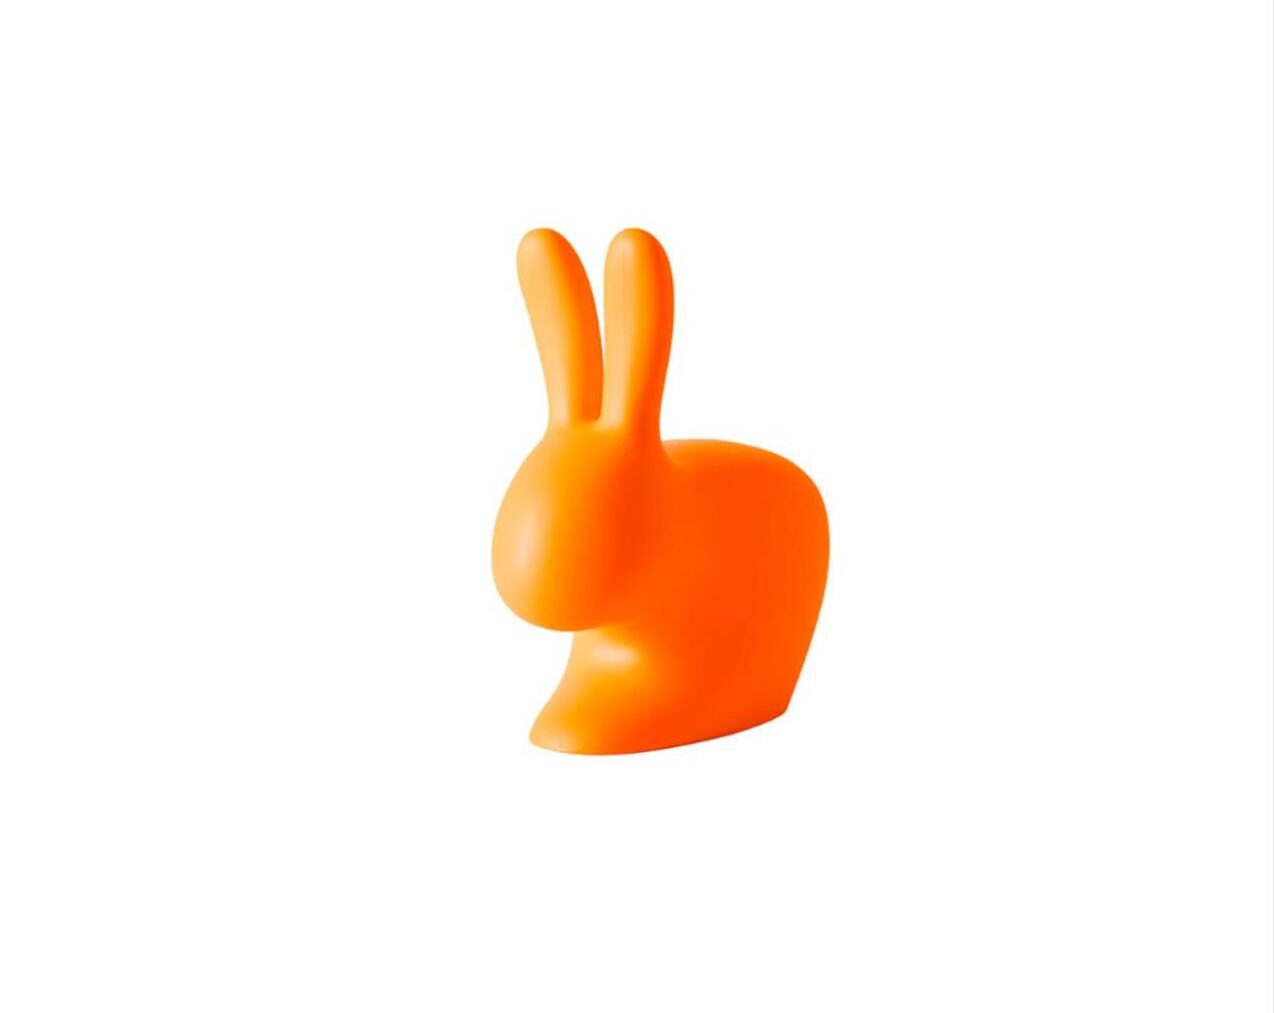 Rabbit-Chair-Baby-Bright-Orange